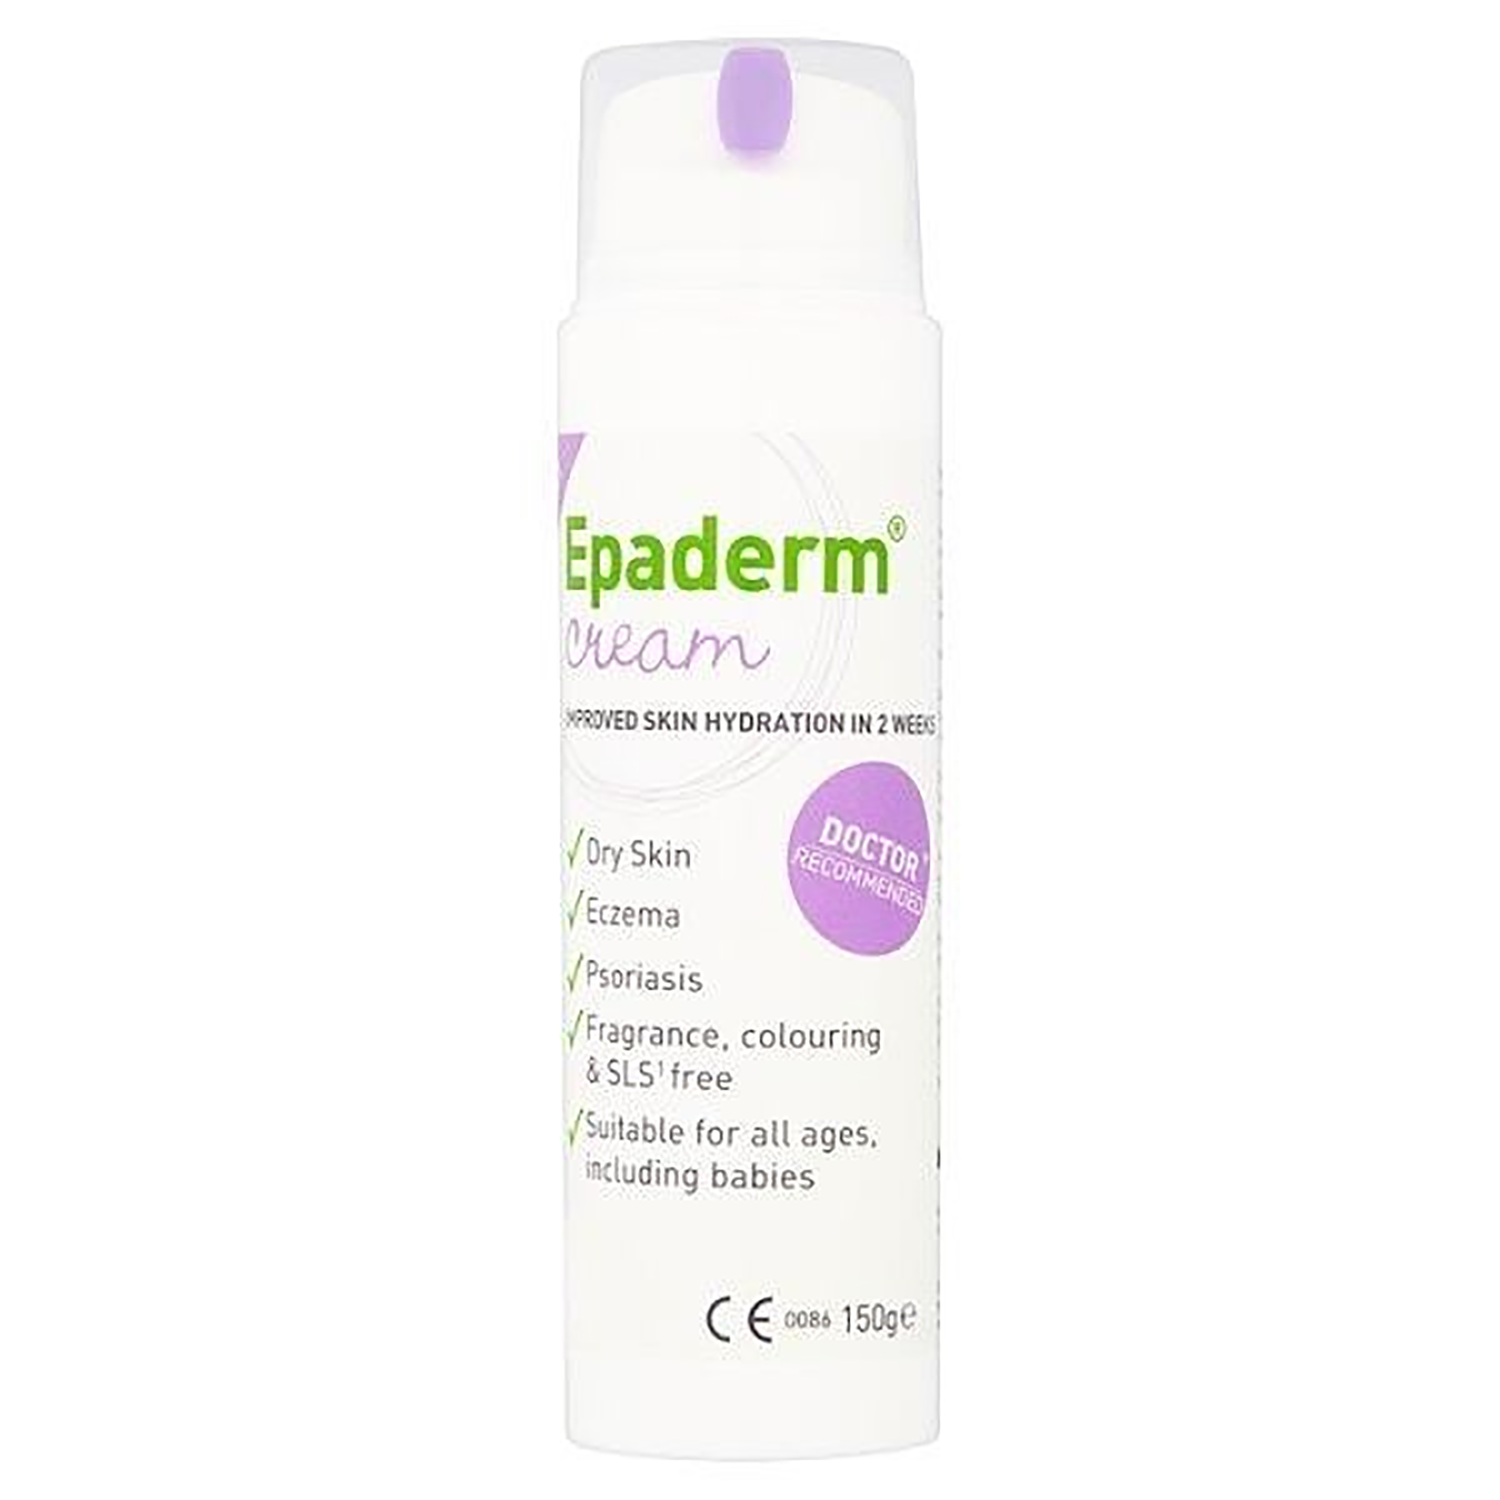 Epaderm Cream | 150g | Pack of 12